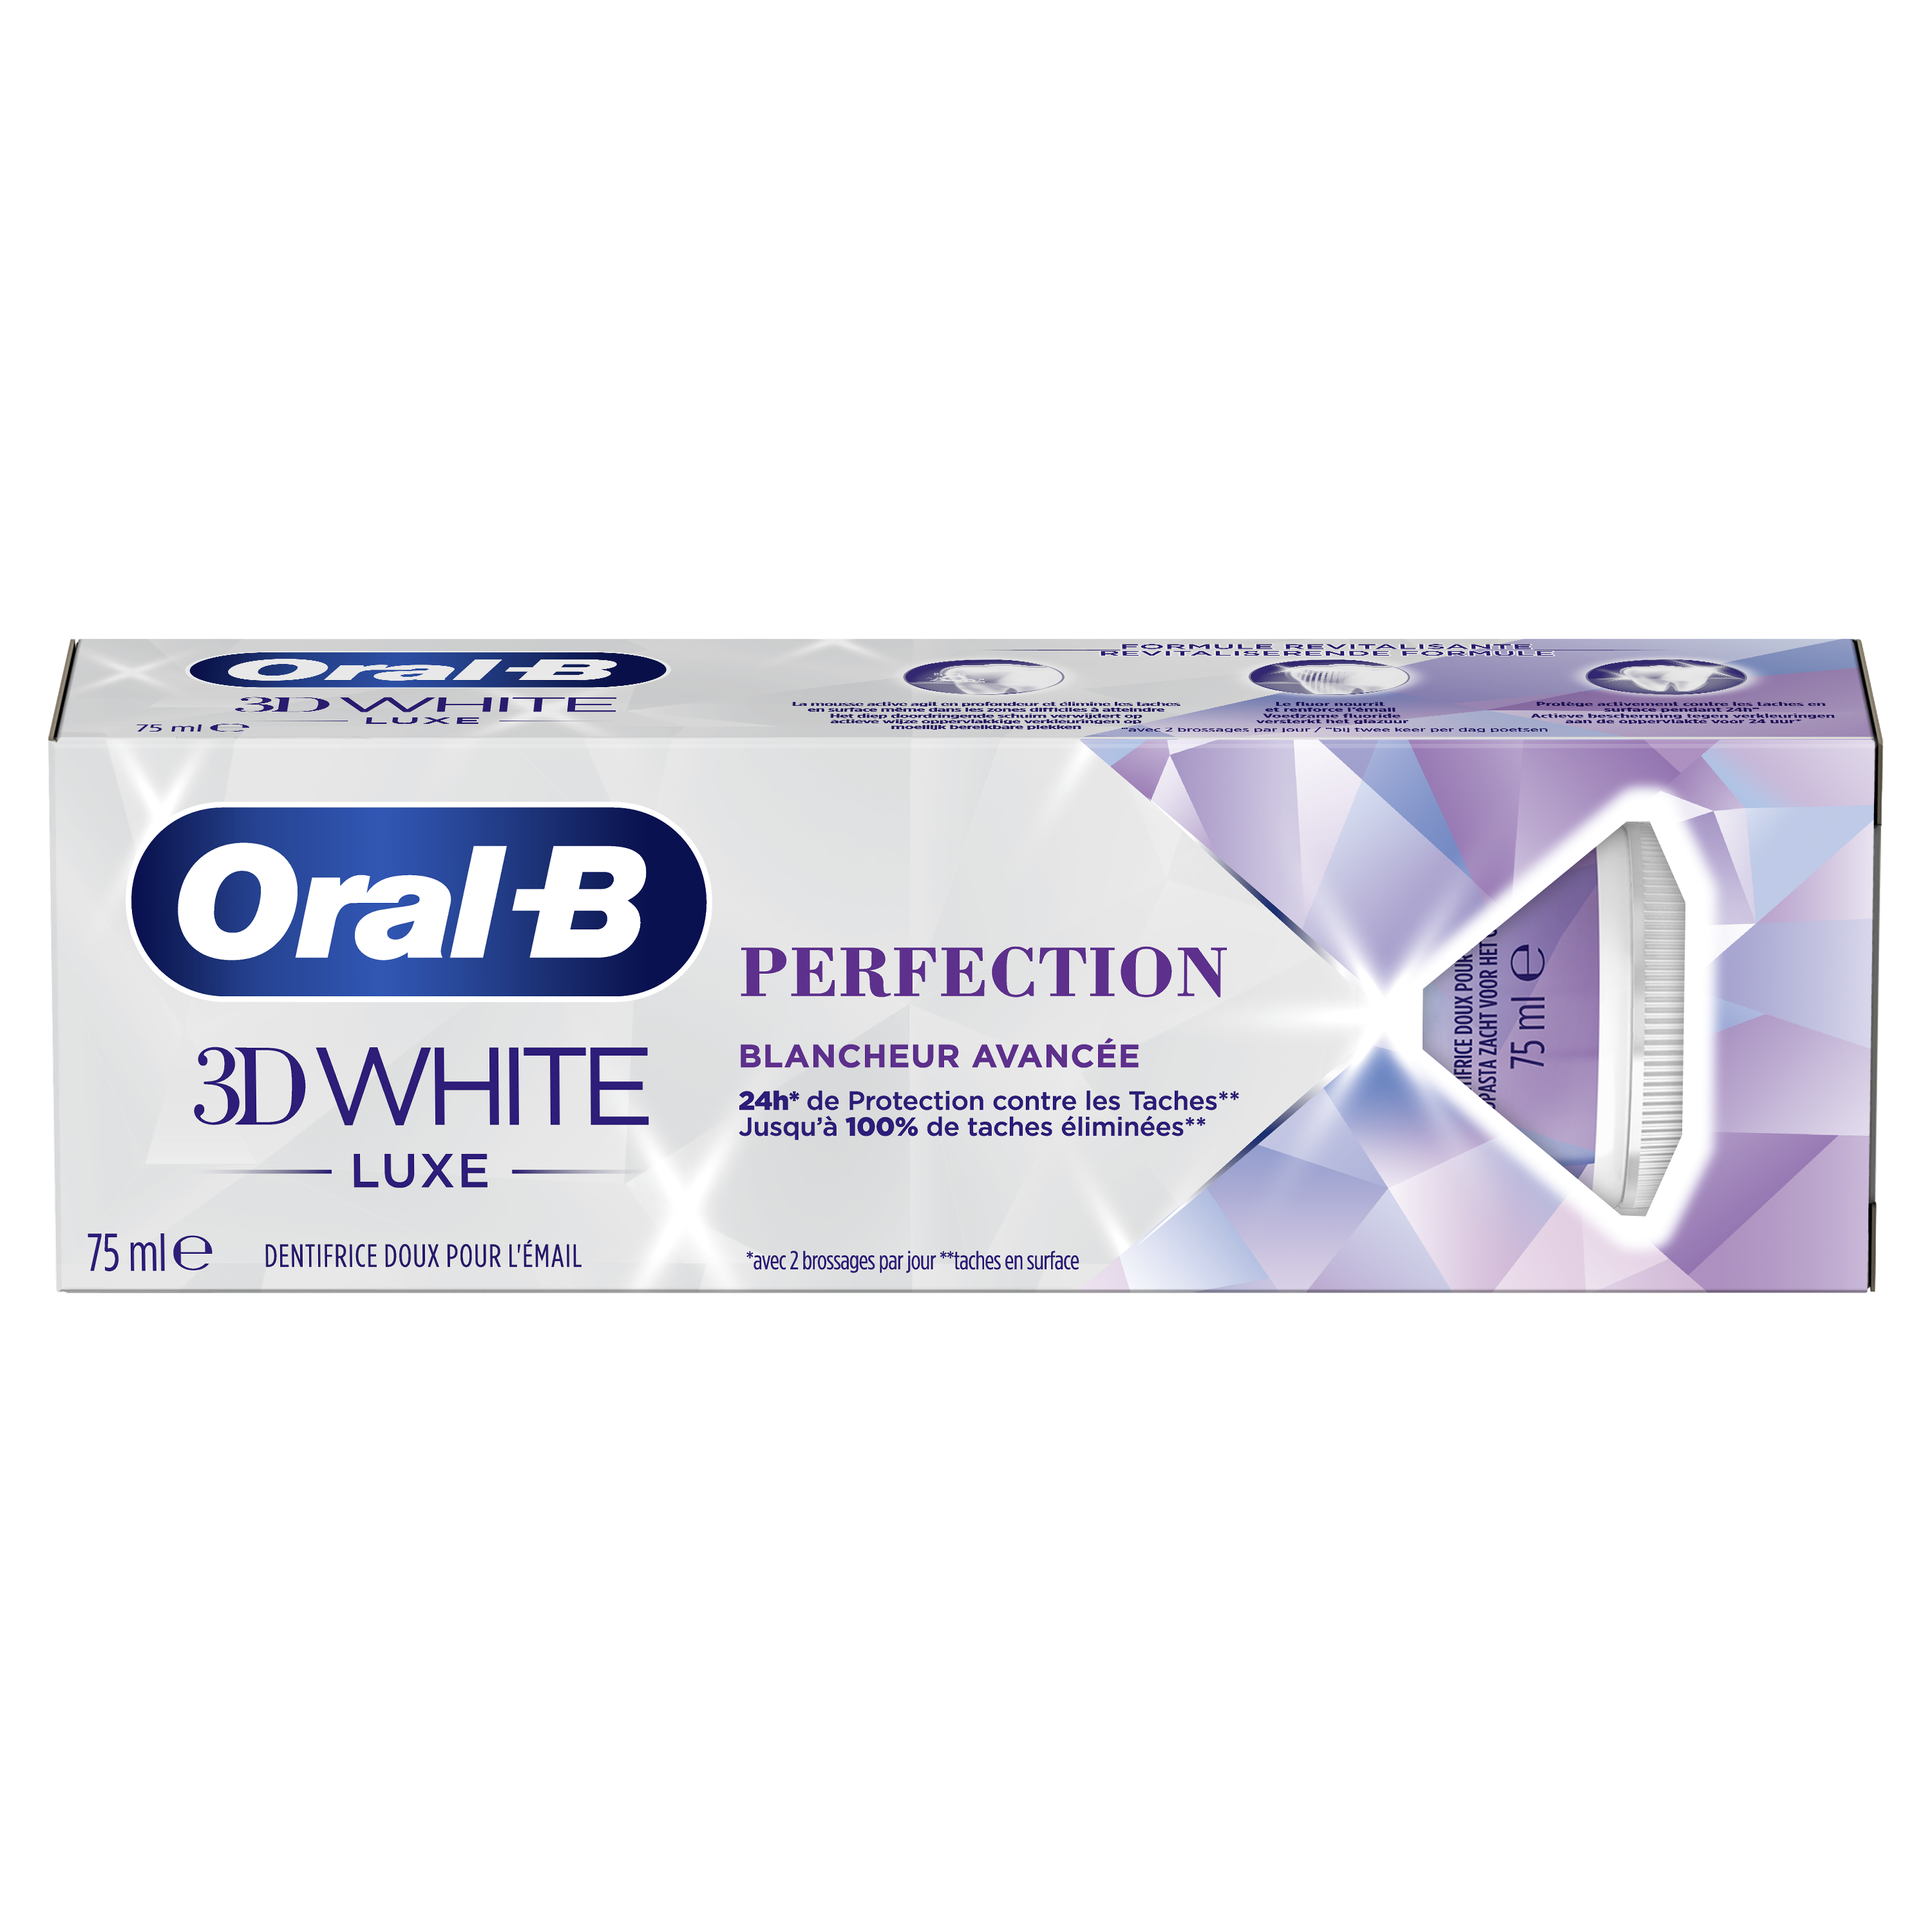 Ugyldigt udstrømning Morgen Oral-B 3D White Luxe Perfection Tandpasta | Oral-B